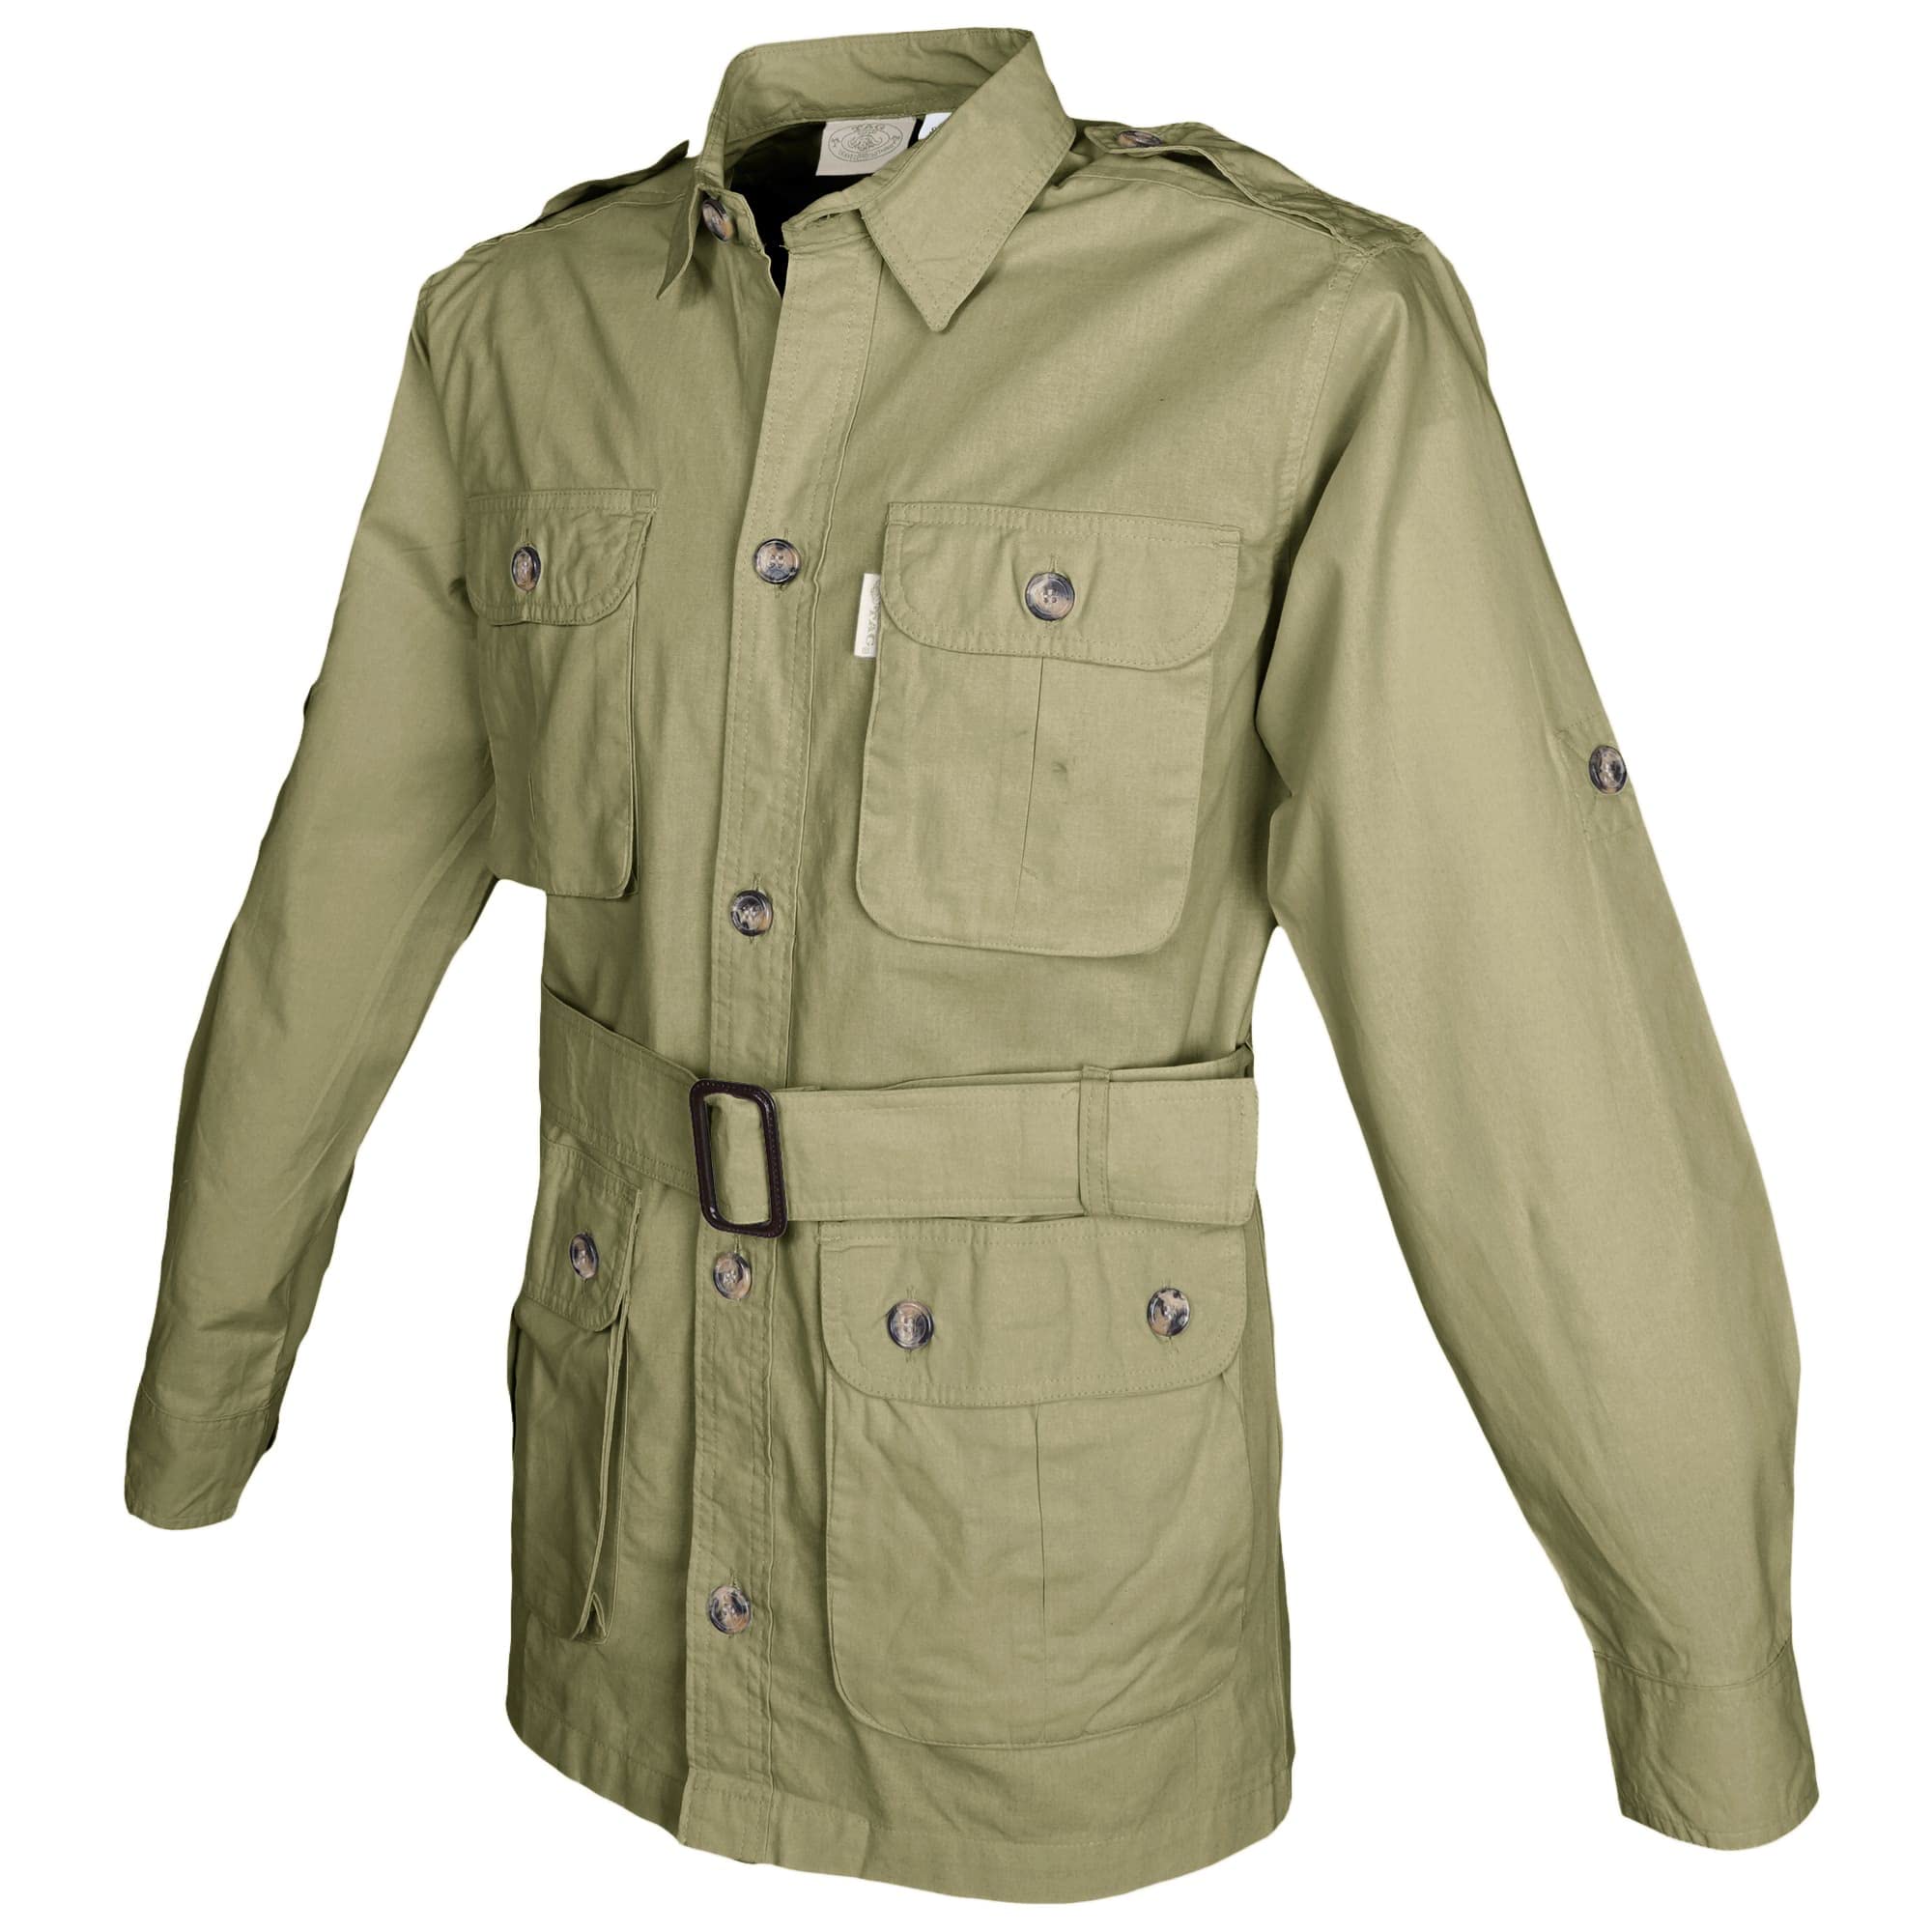 Safari Jacket for Men - Khaki | eBay